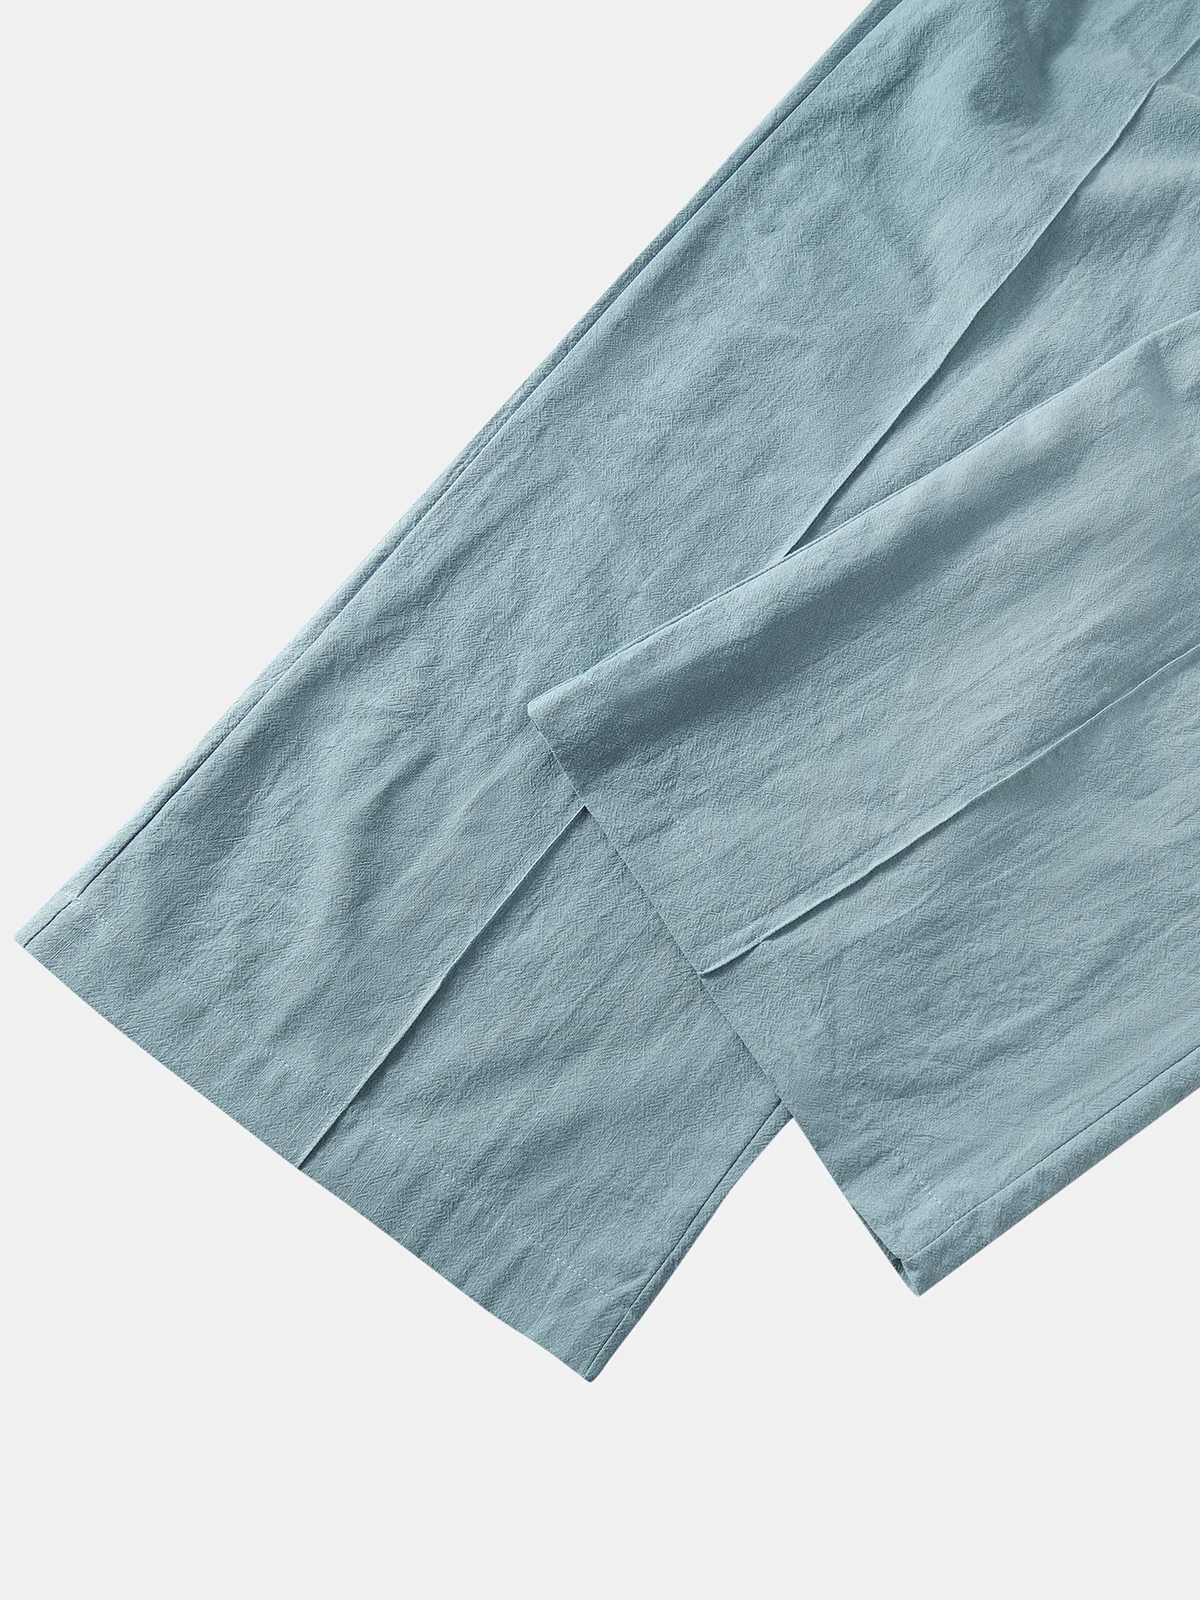 Hardaddy Cotton Elastic-Waist Pants